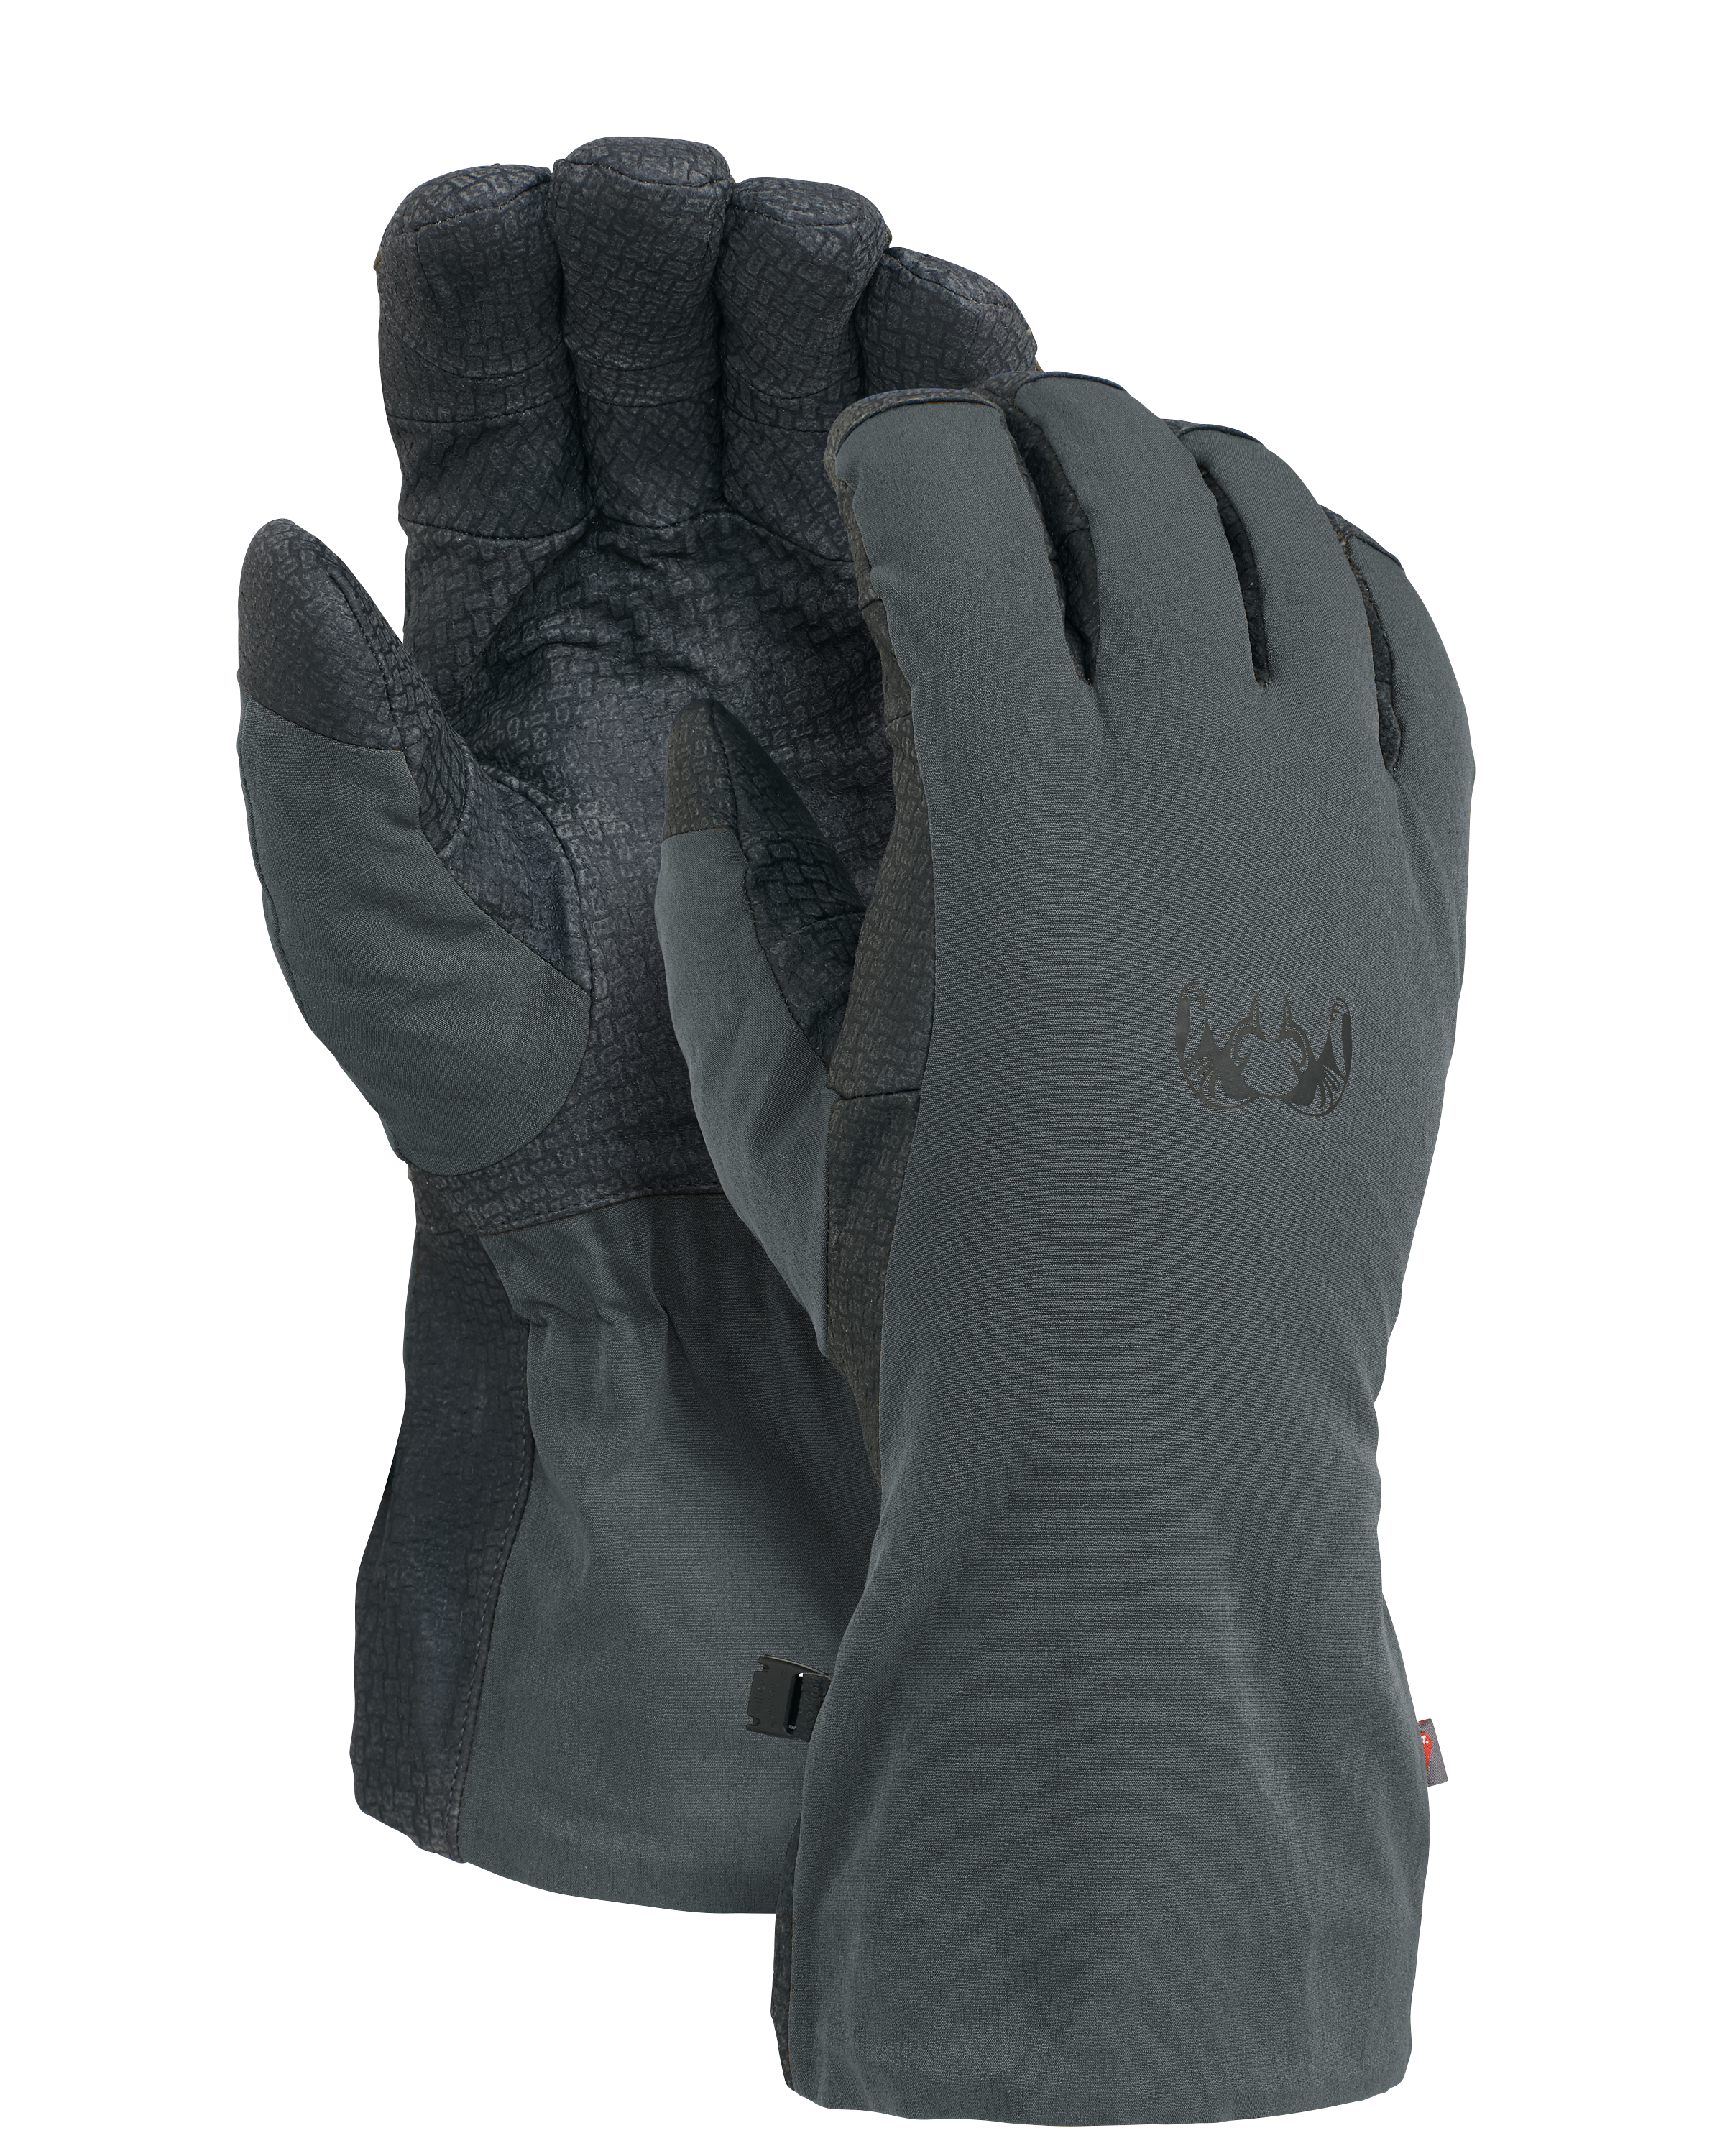 KUIU Northstar Hunting Glove in Gunmetal | Size 2XL